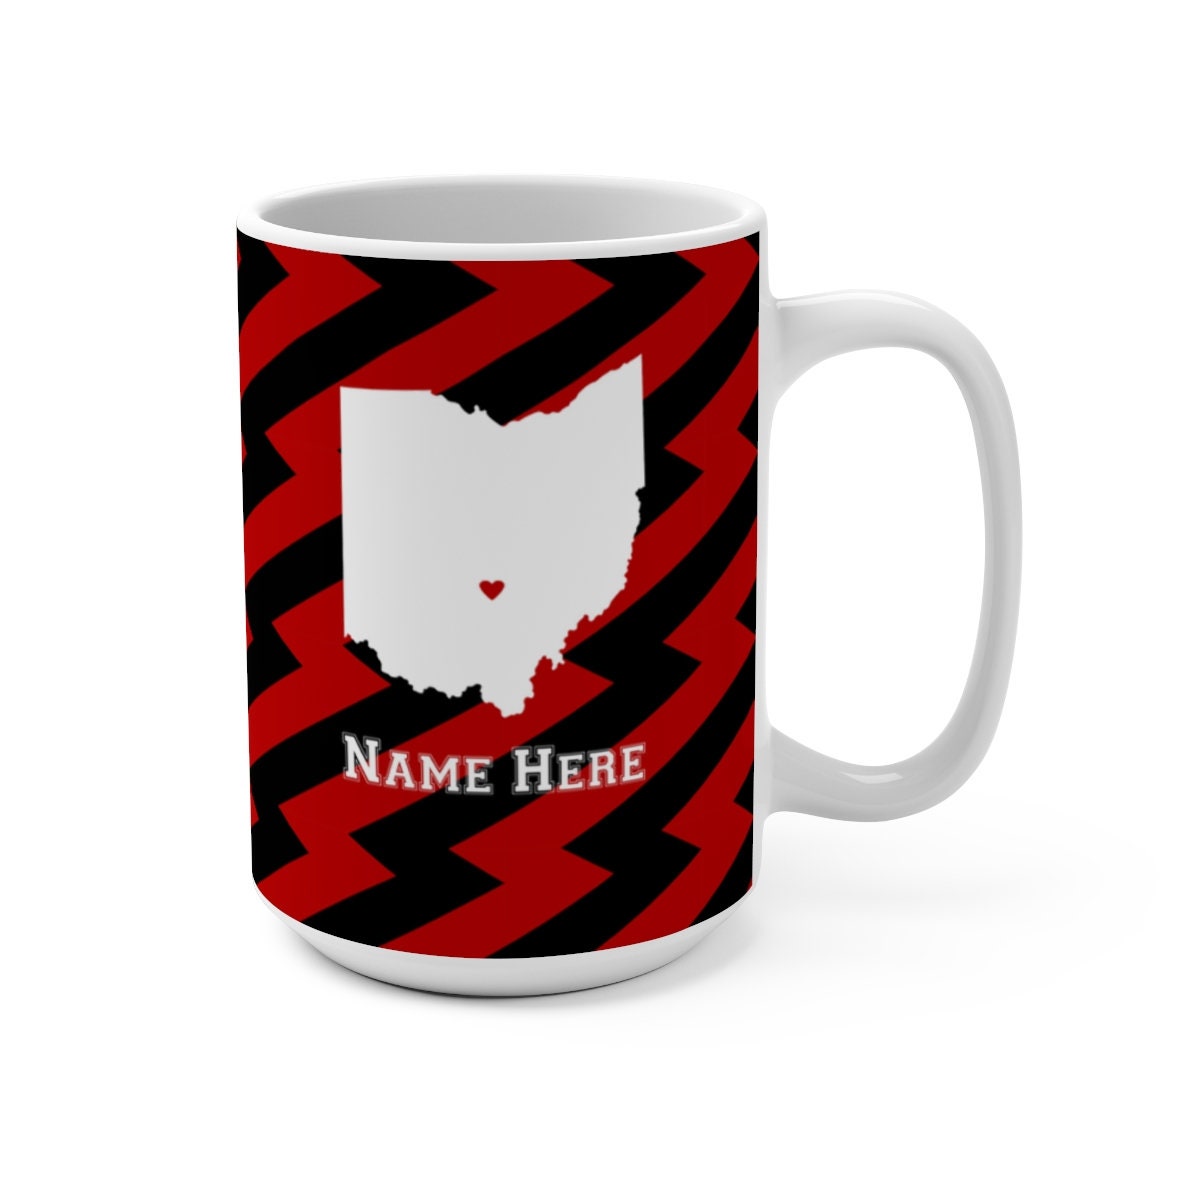 Ohio State Coffee Cups, Ohio State Mugs, Ohio State Buckeyes Pint